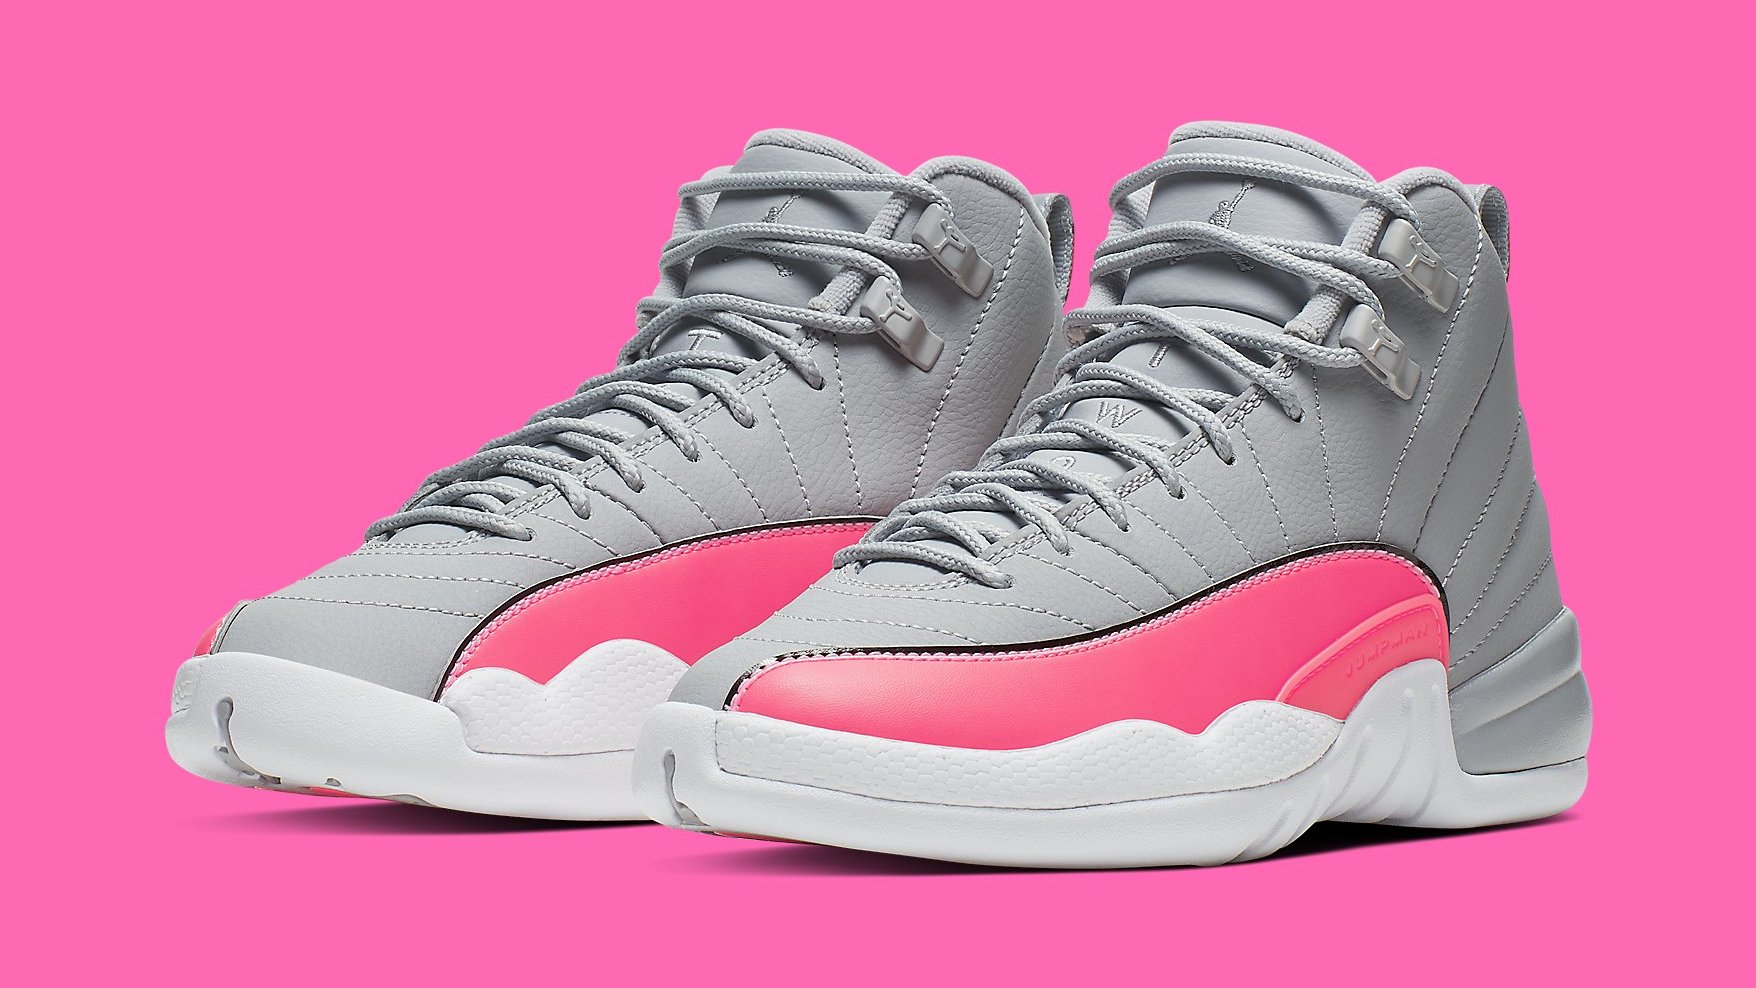 grey and pink jordan 12s